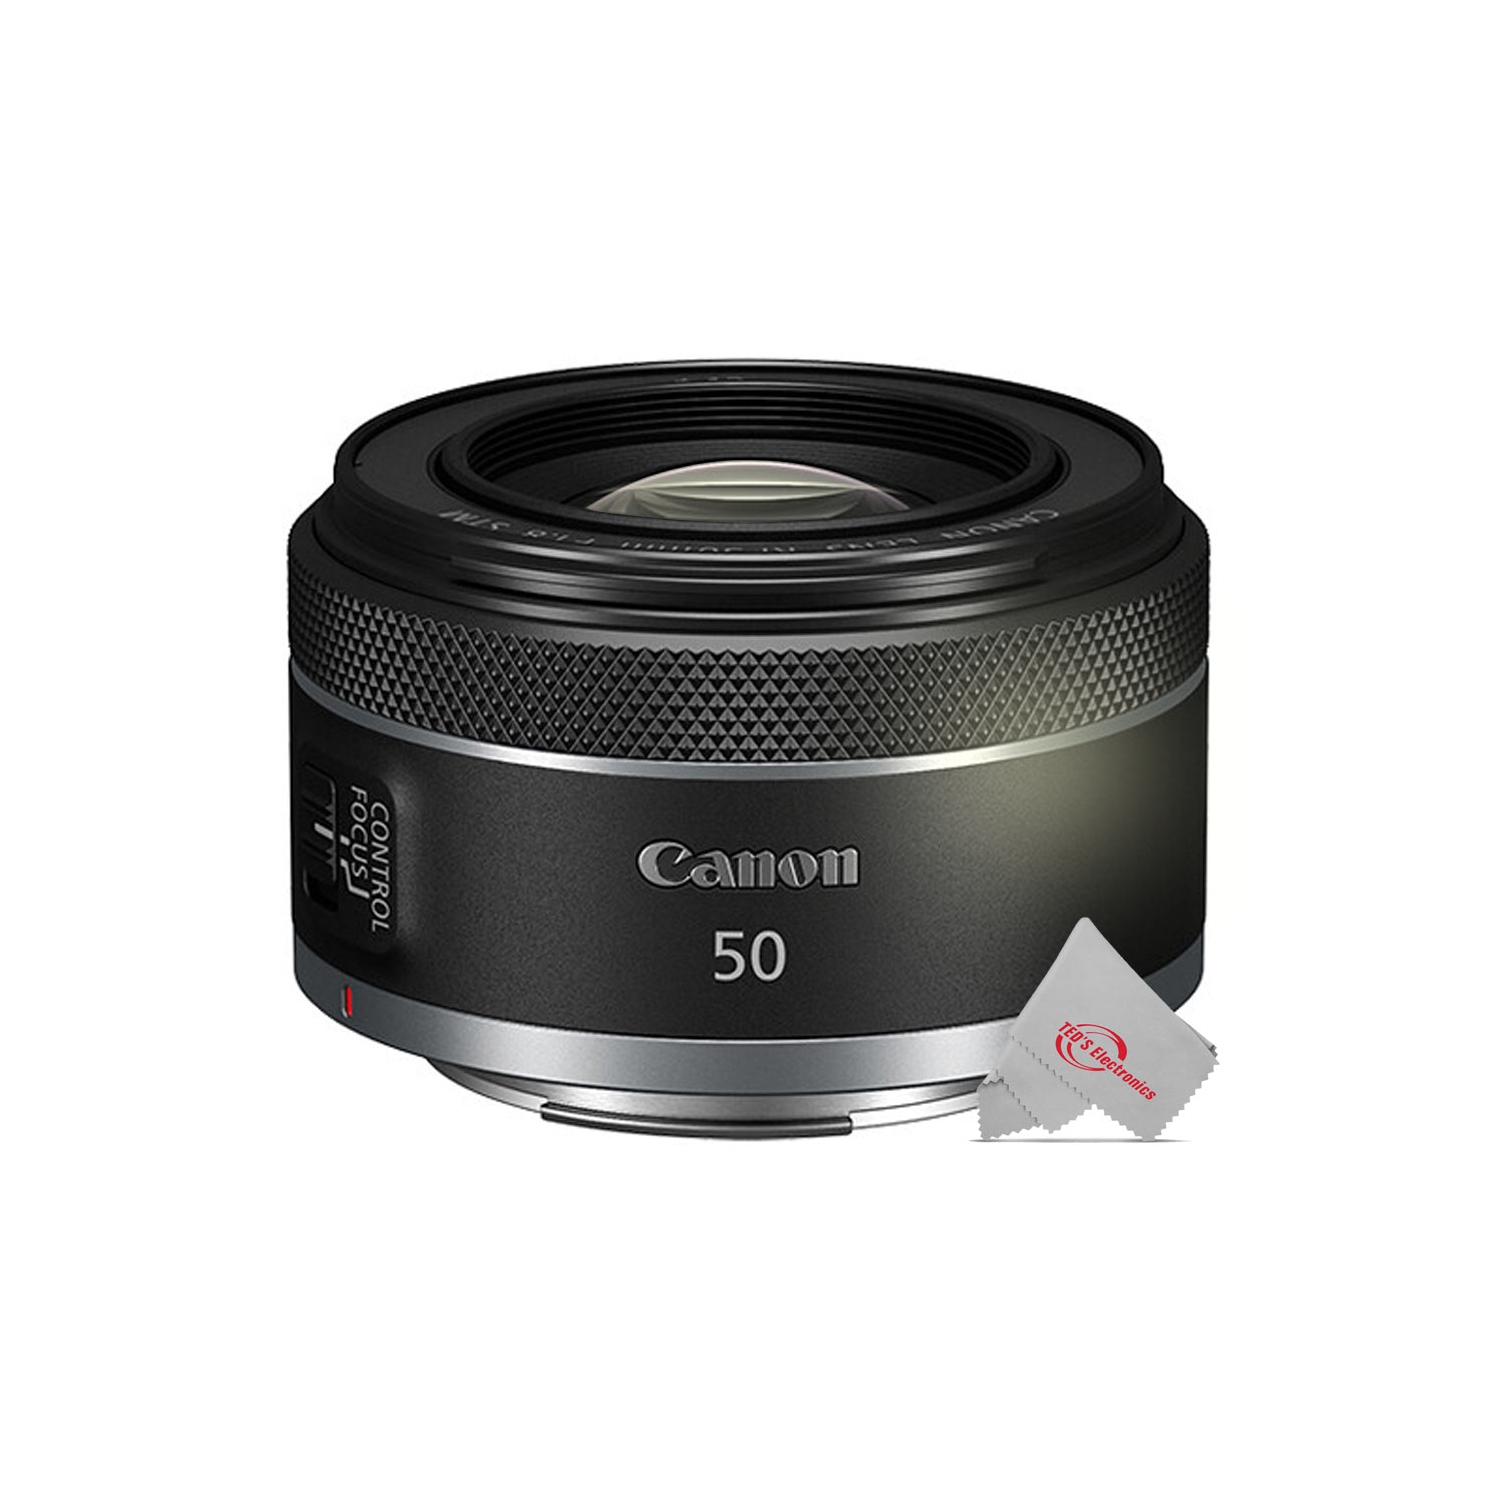 Canon RF 50mm f/1.8 STM Lens Open Box- International Version with Seller Warranty